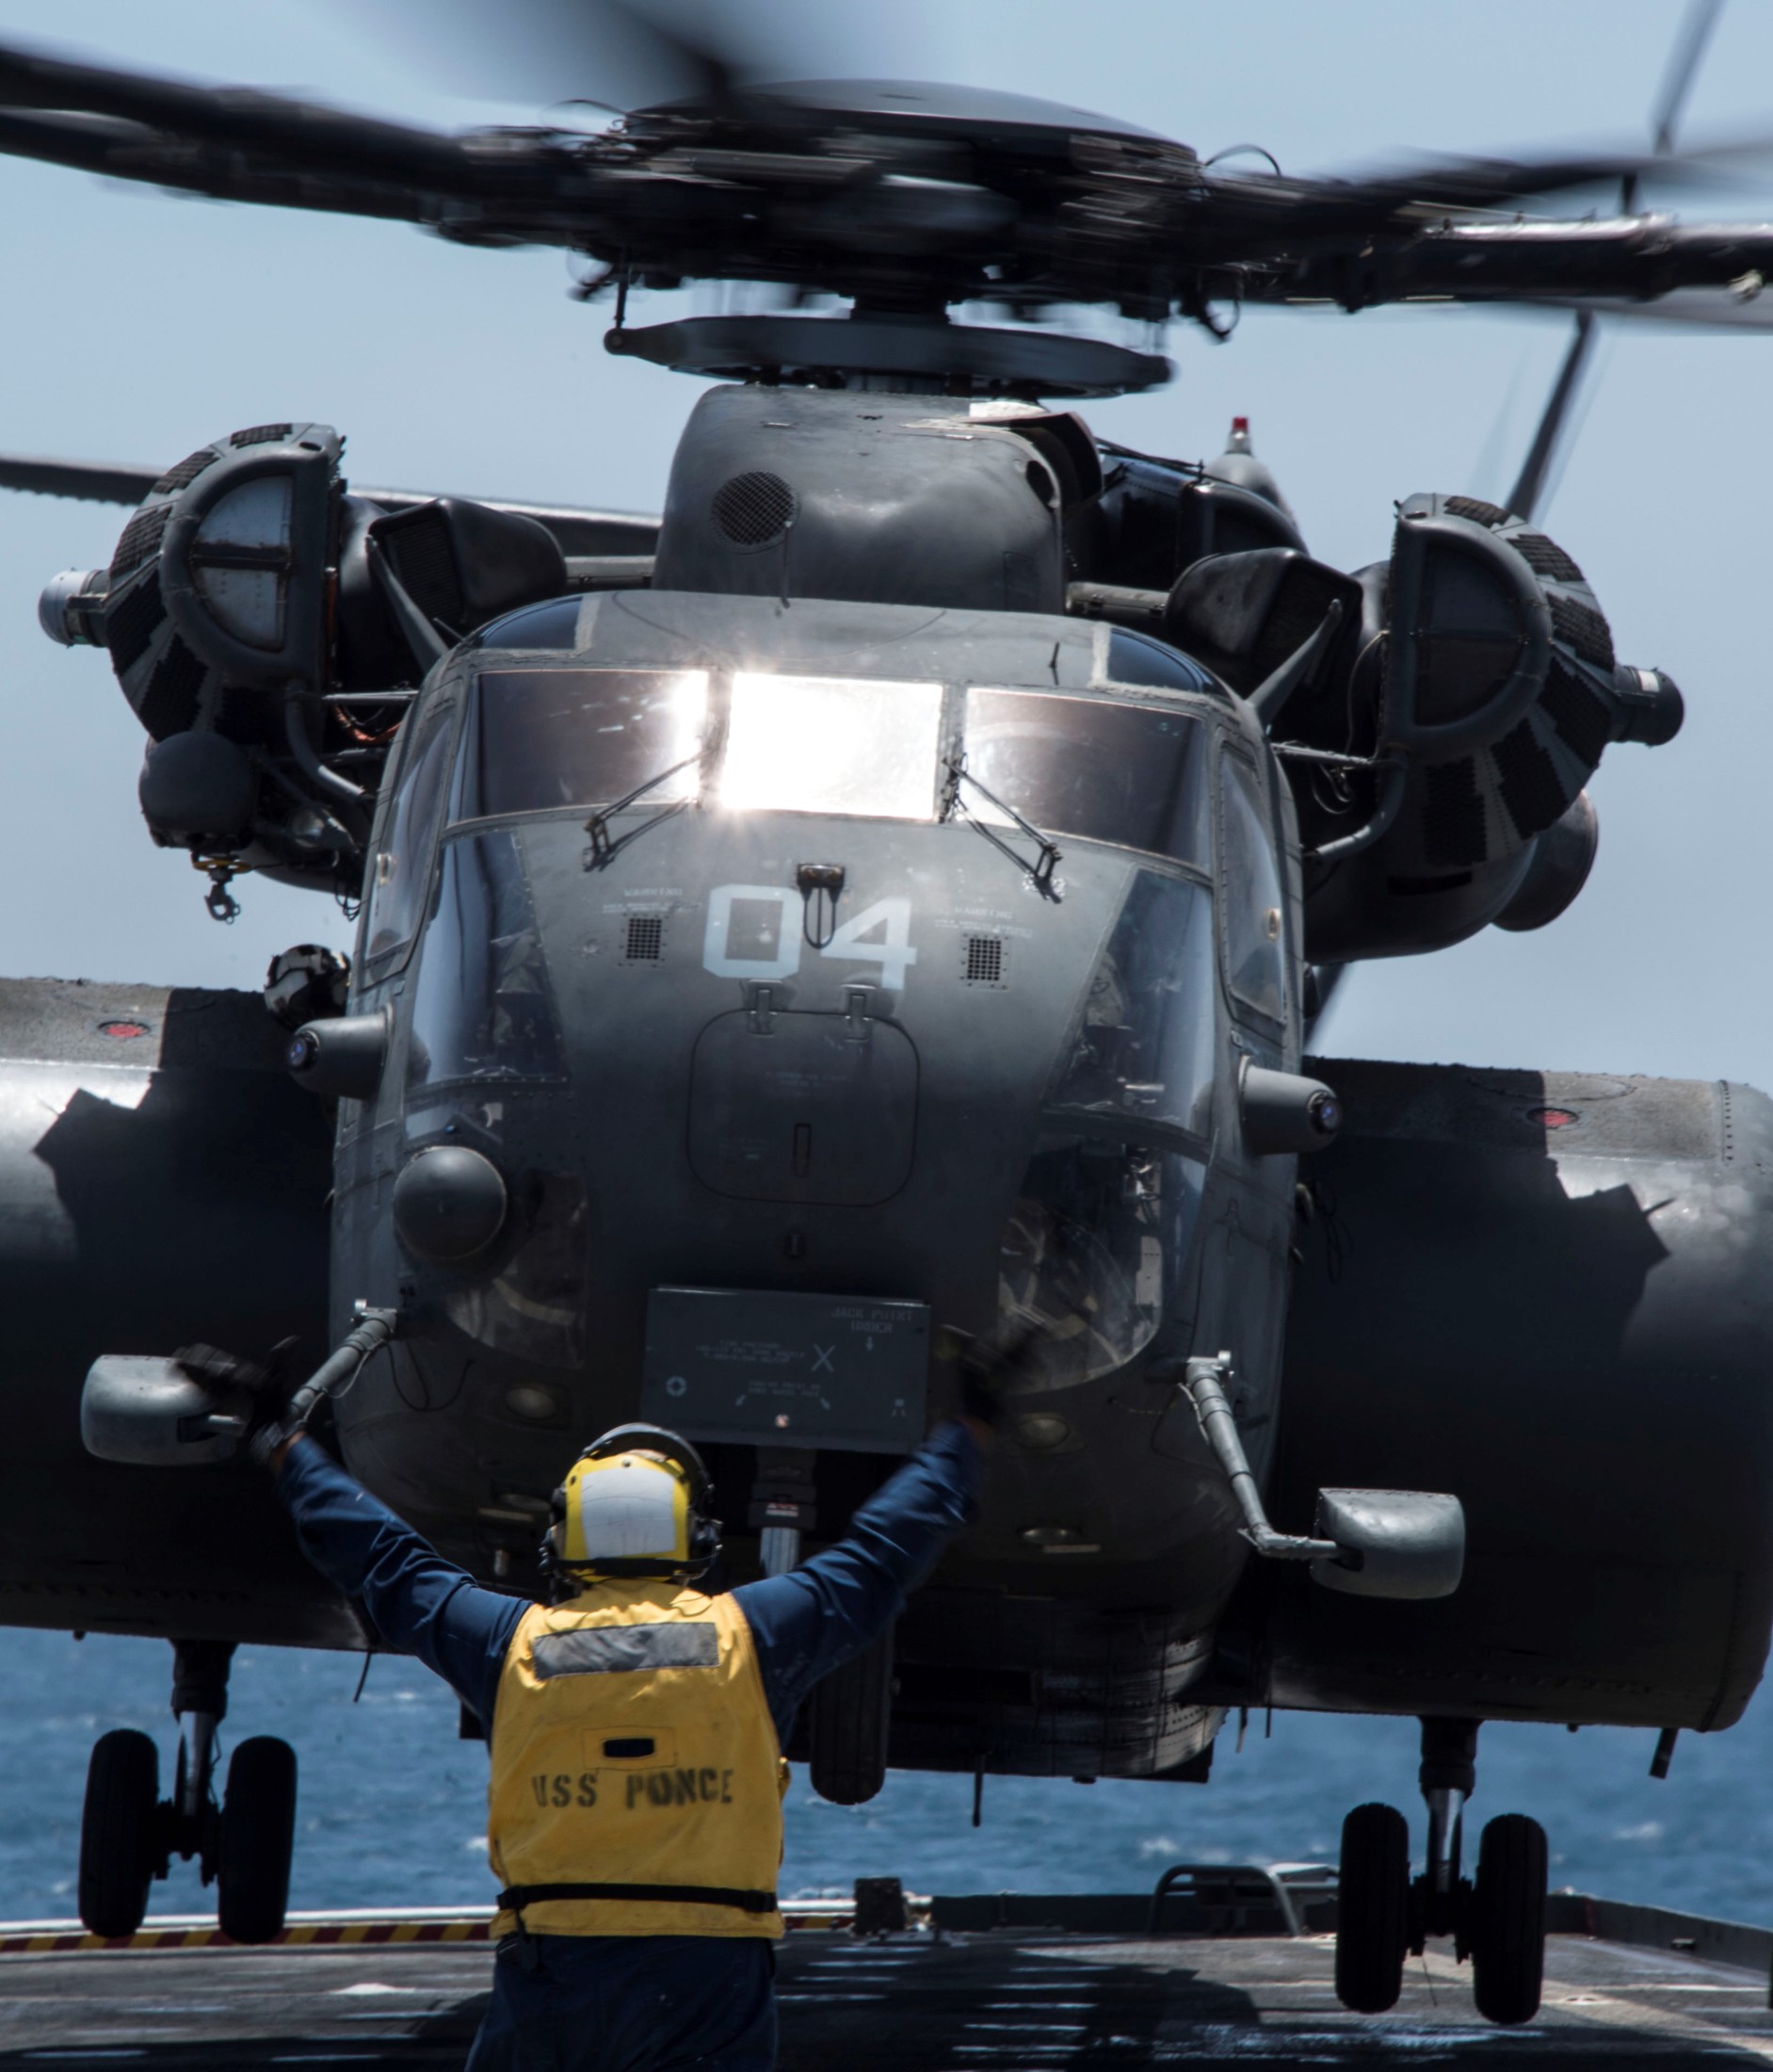 hm-15 blackhawks helicopter mine countermeasures squadron navy mh-53e sea dragon 121